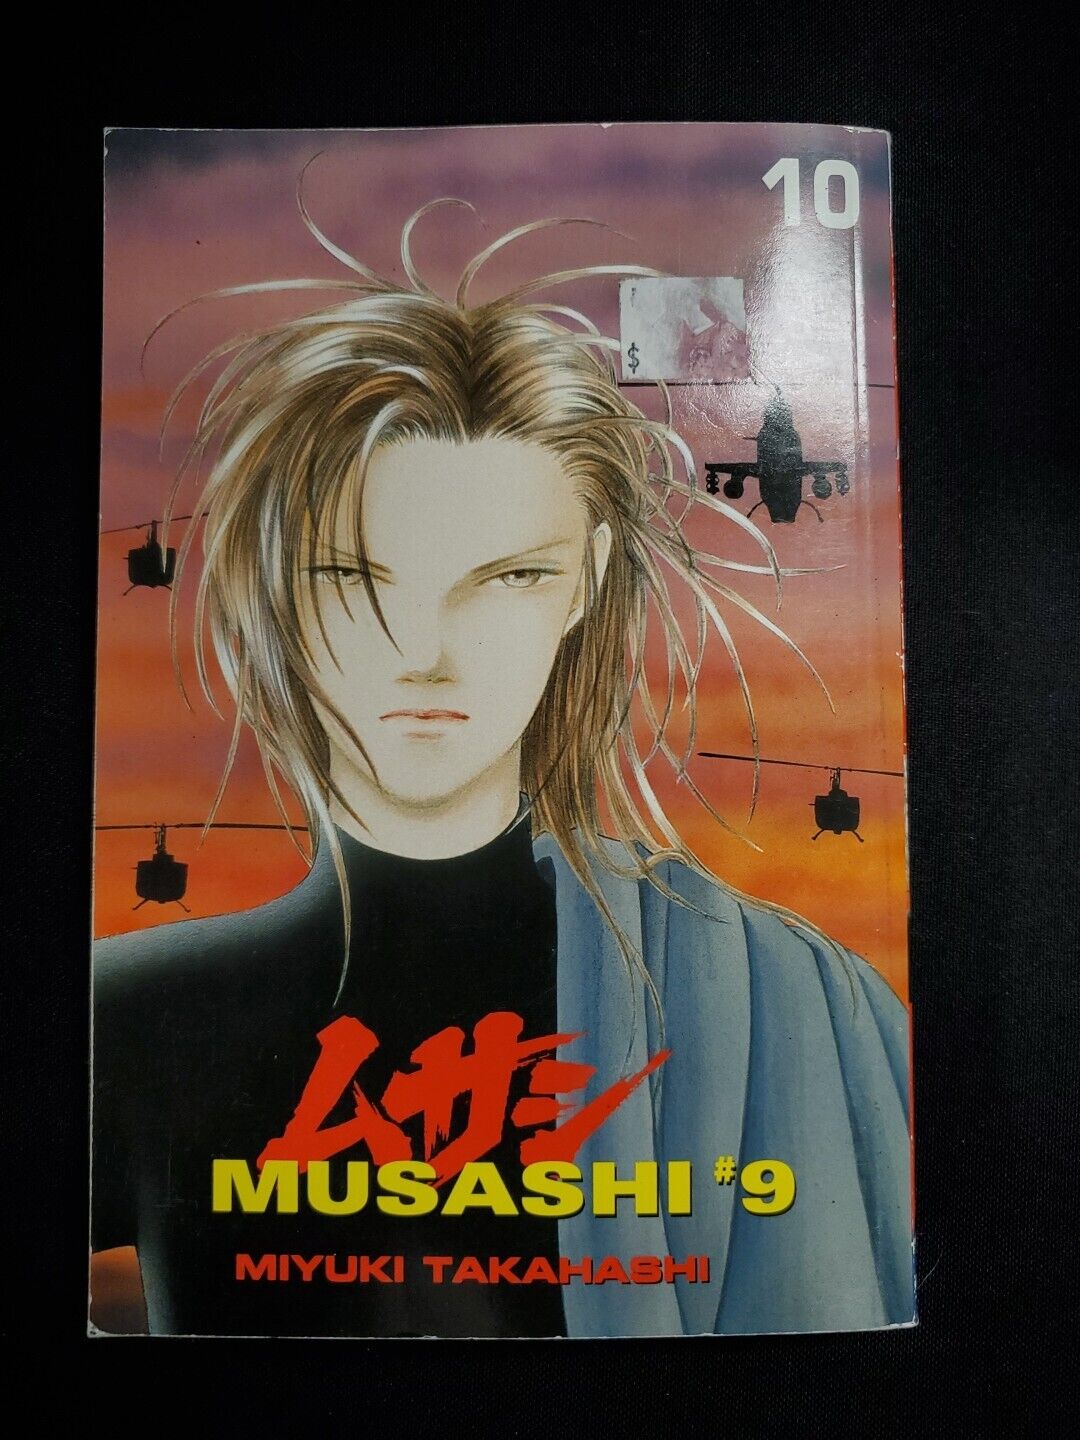 Musashi # 9 Vol 10 Manga ⚔️ Action Graphic Novel CMX